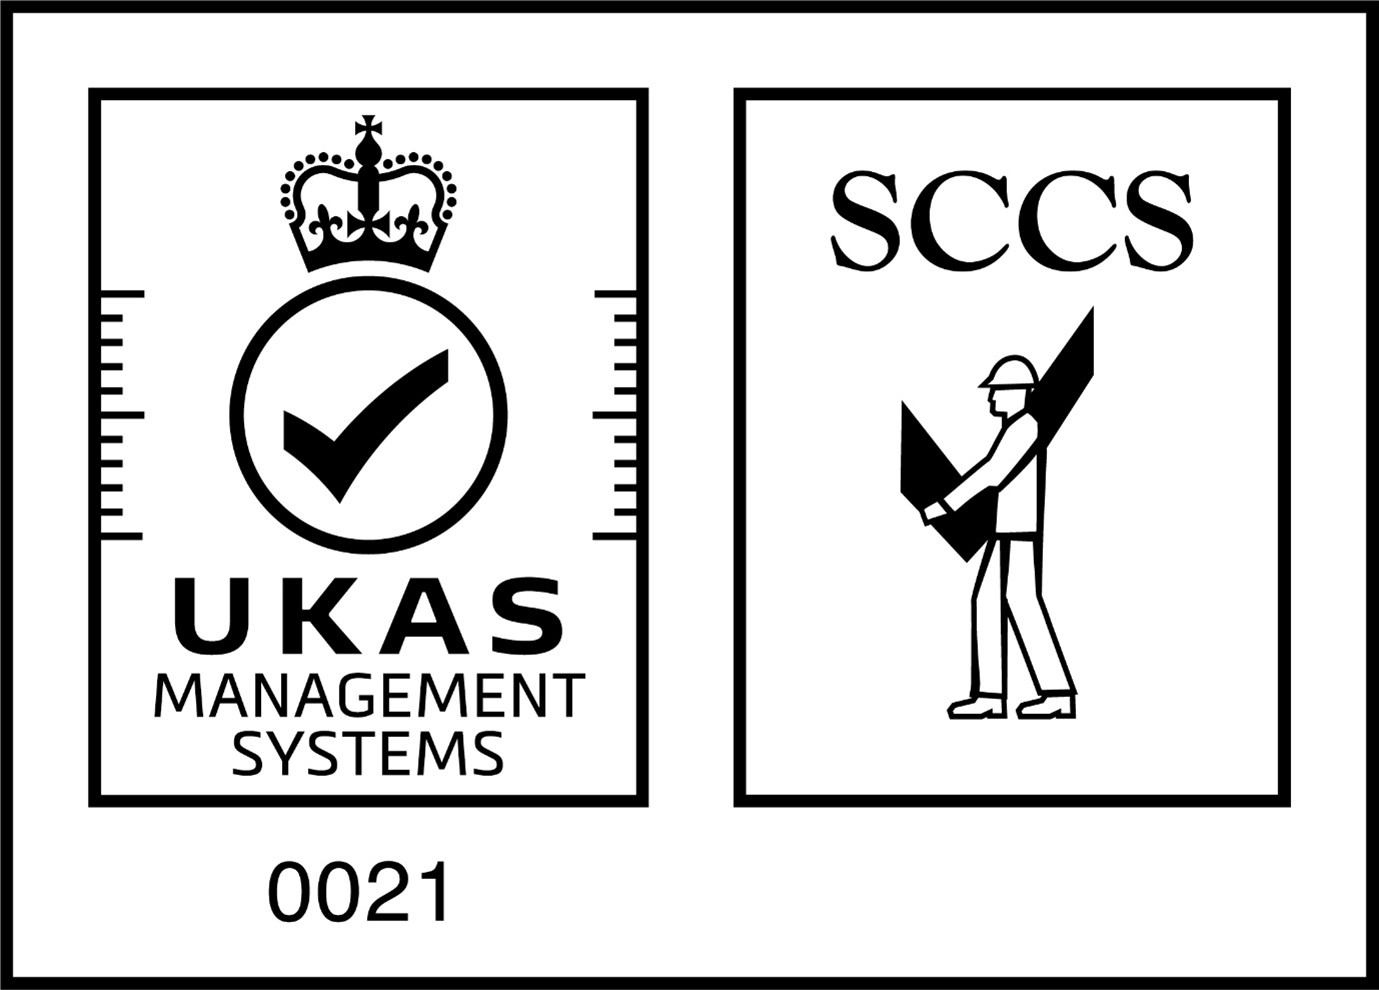 SCCS UKAS logo